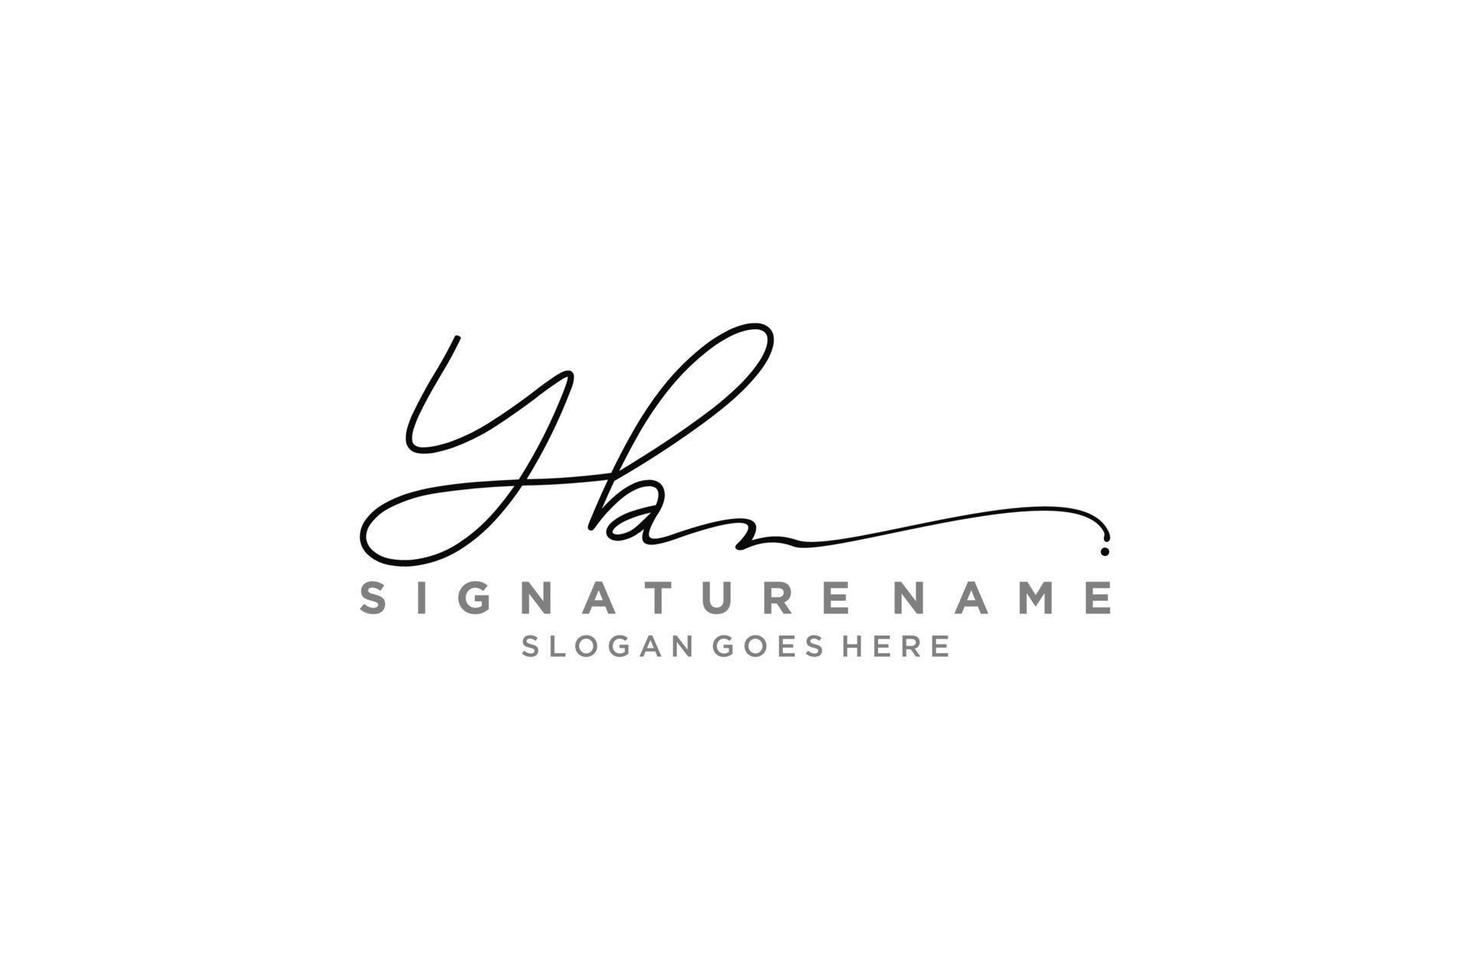 första yb brev signatur logotyp mall elegant design logotyp tecken symbol mall vektor ikon